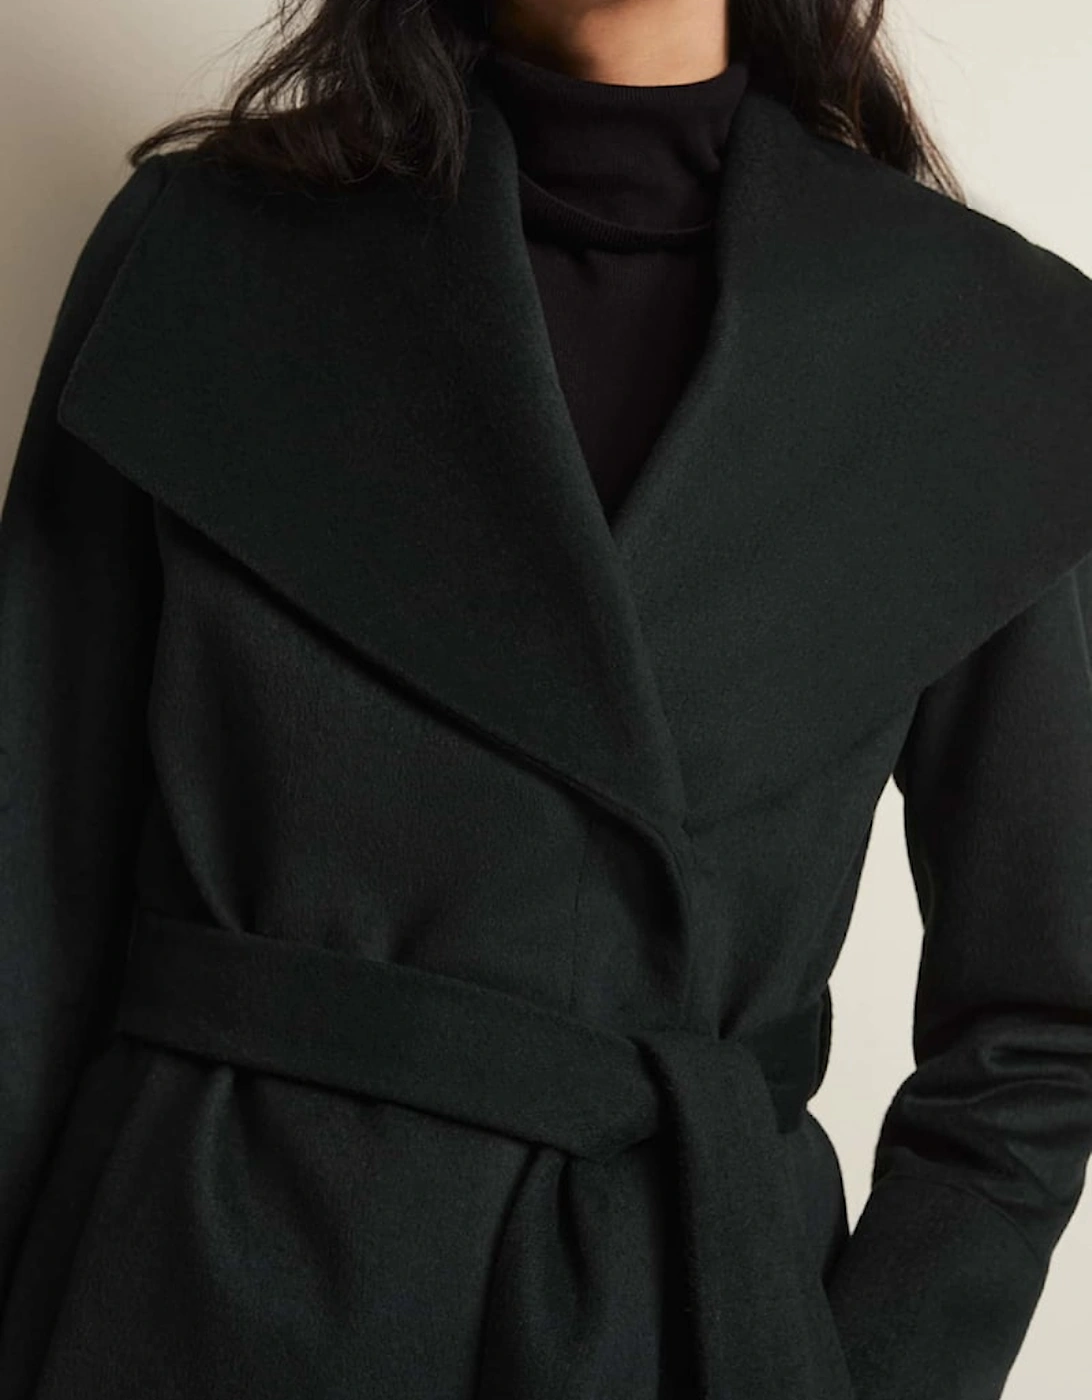 Nicci Dark Green Wool Smart Coat